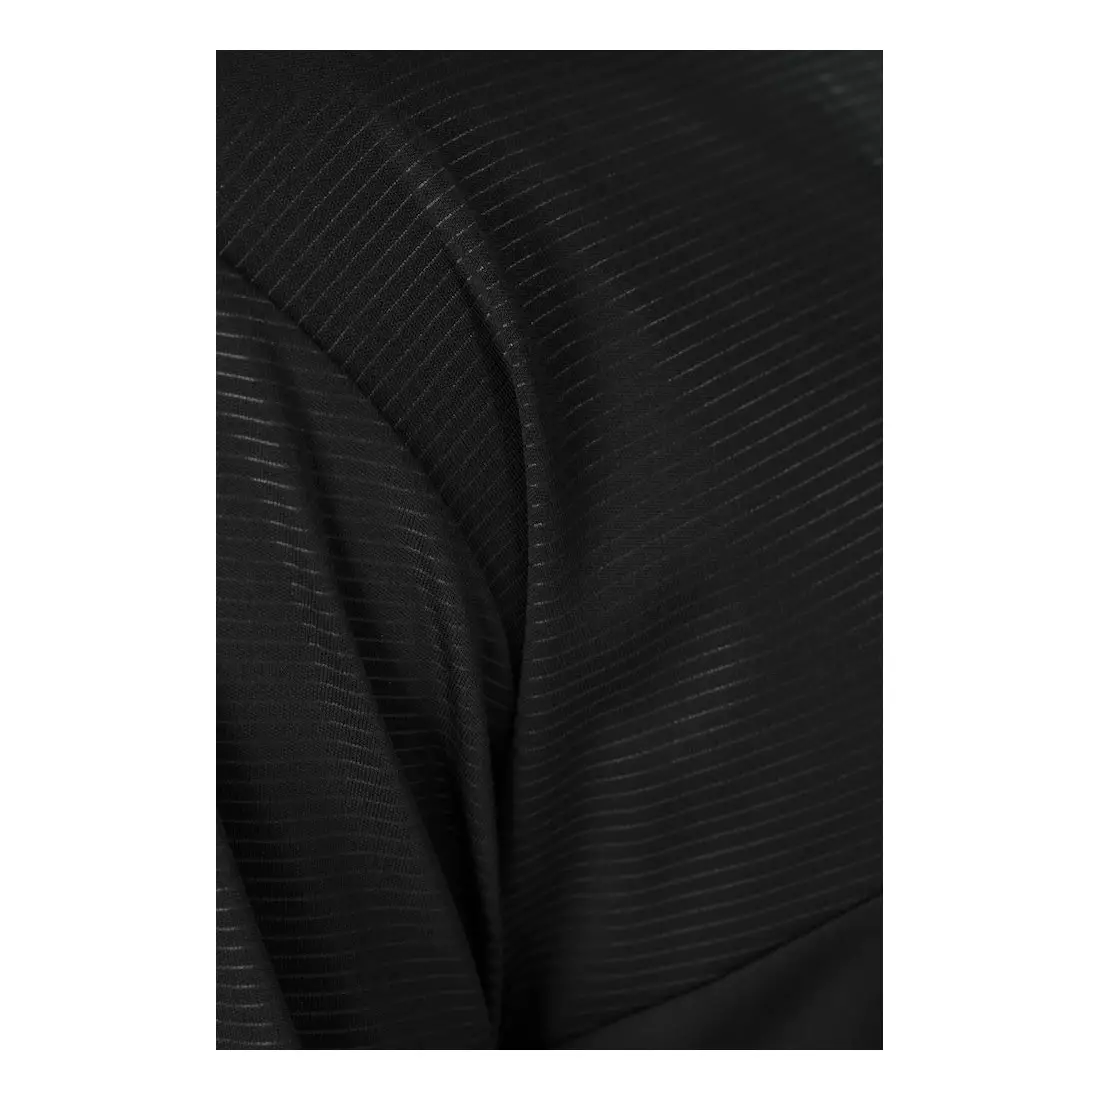 CRAFT RADIATE LS 1905387-999603 long-sleeved running shirt black